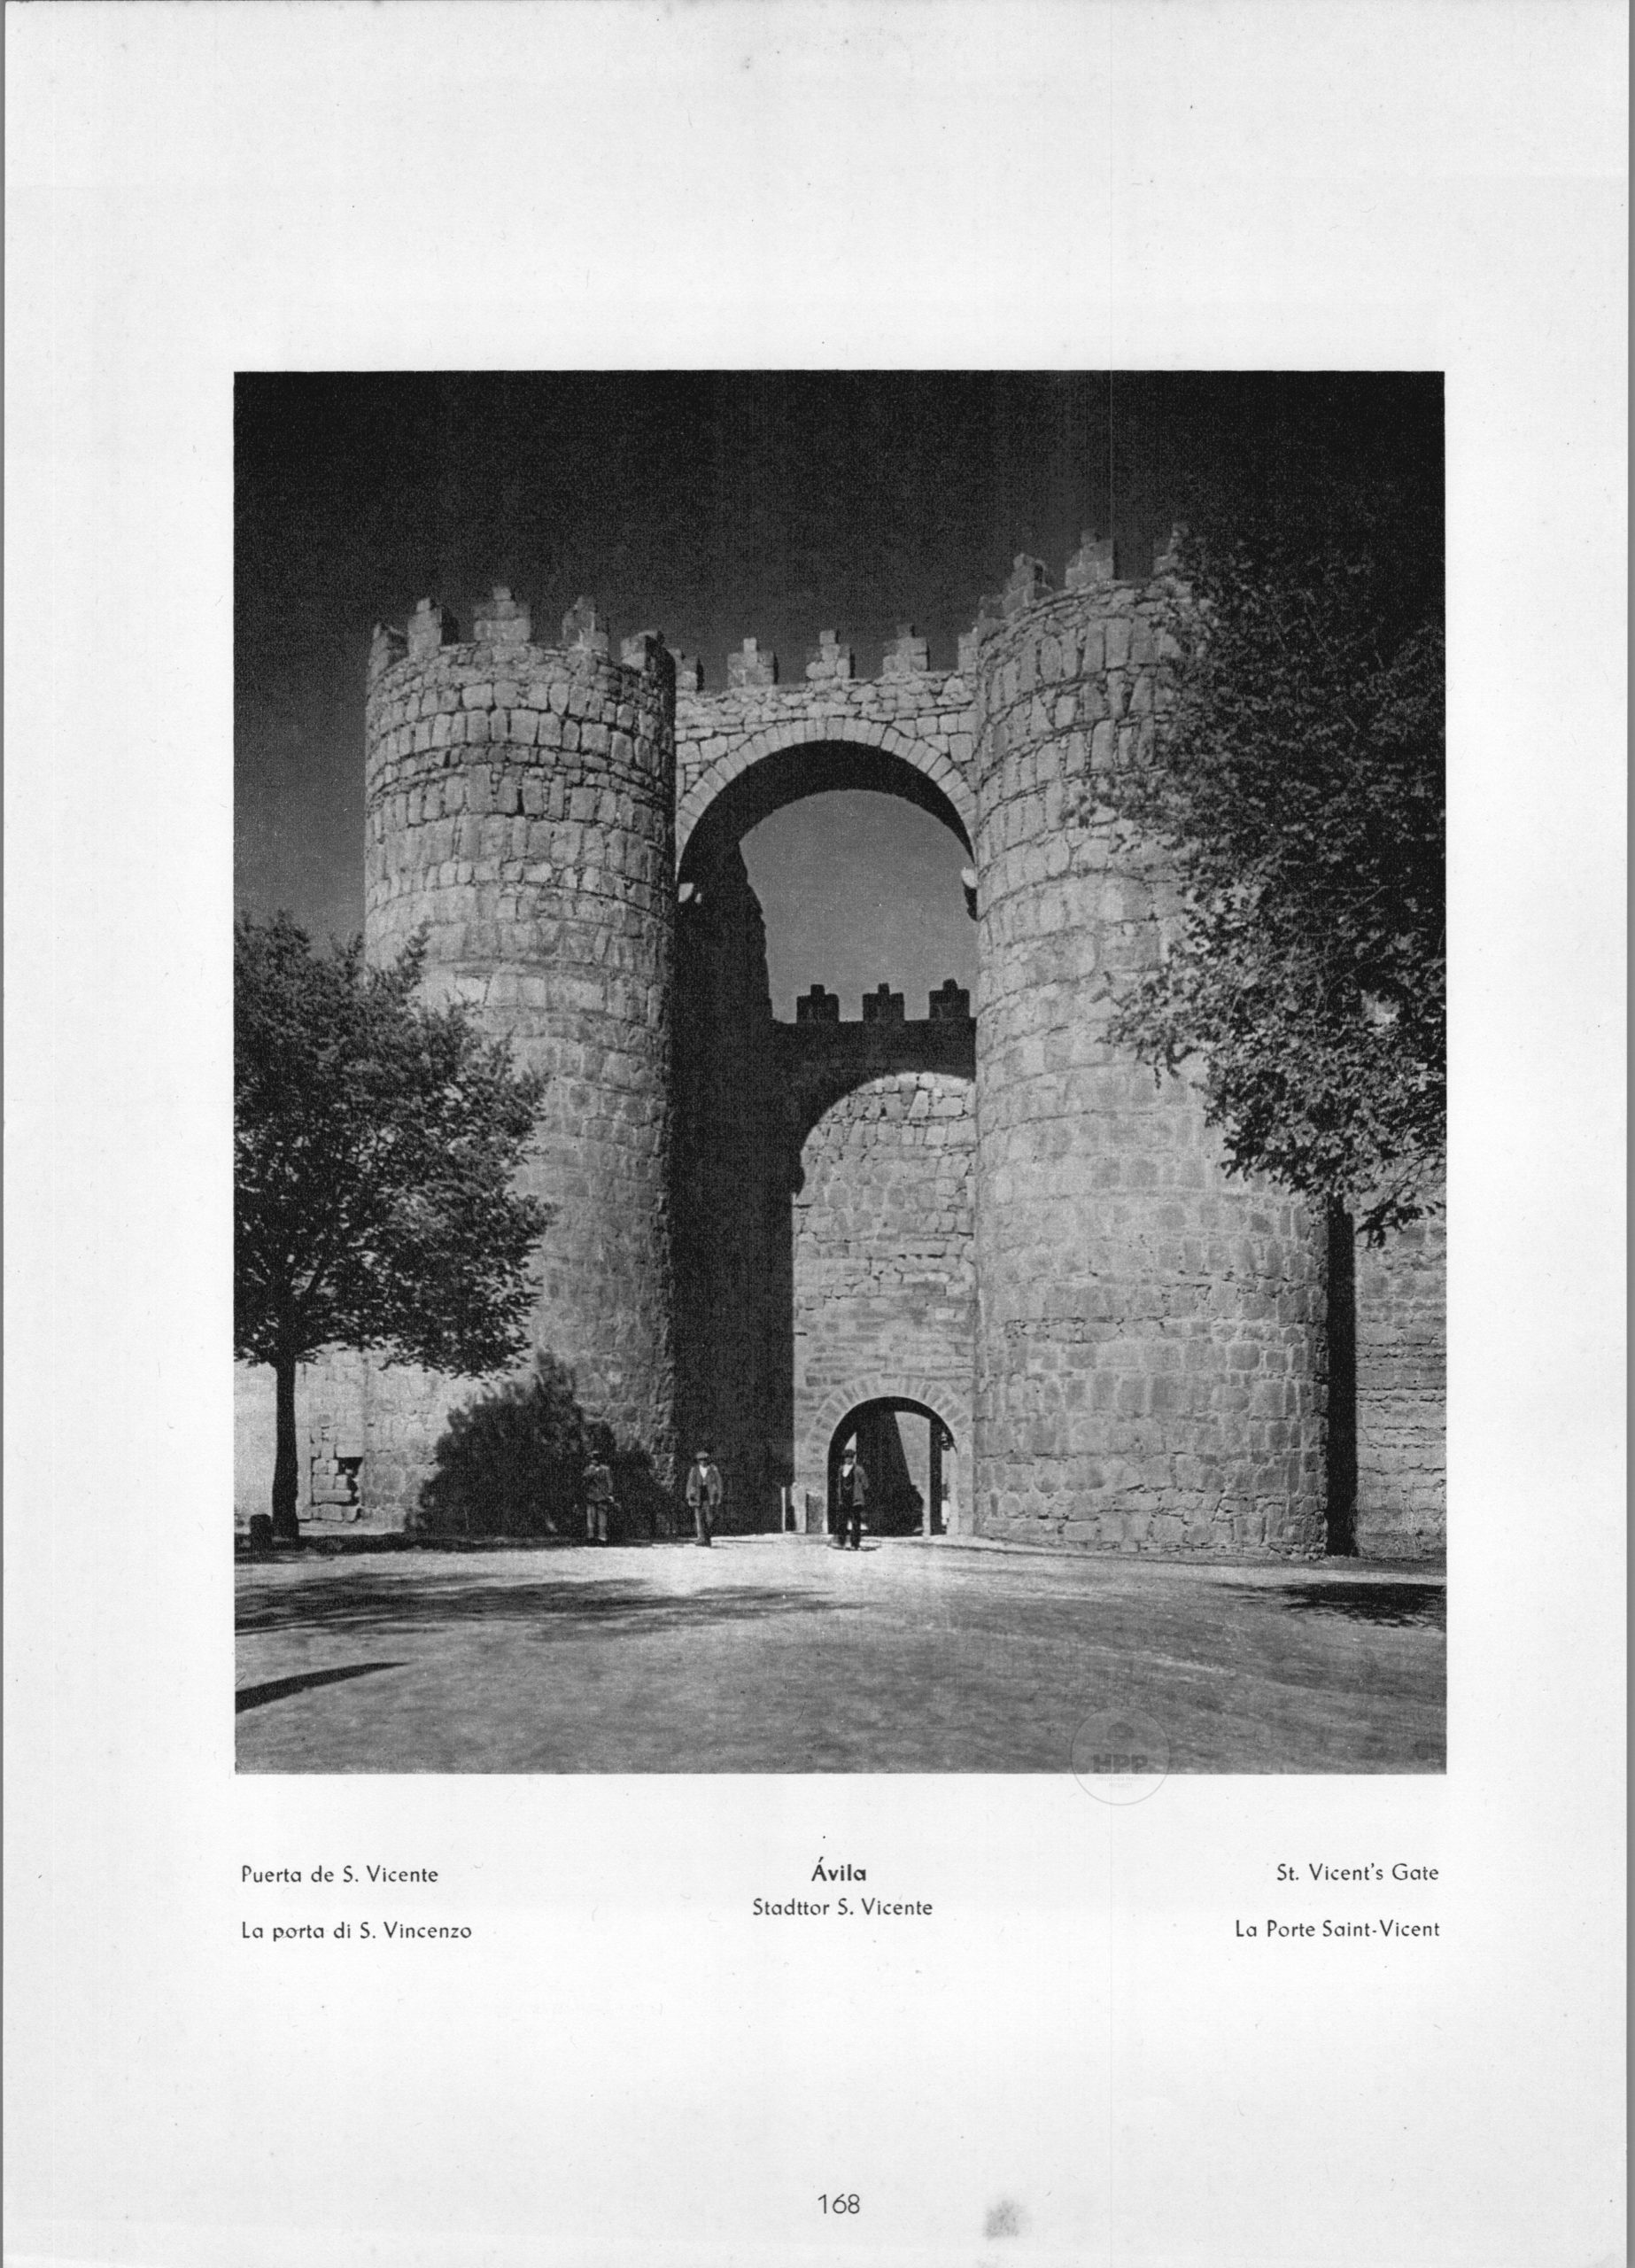 Ávila - St. Vincent's Gate